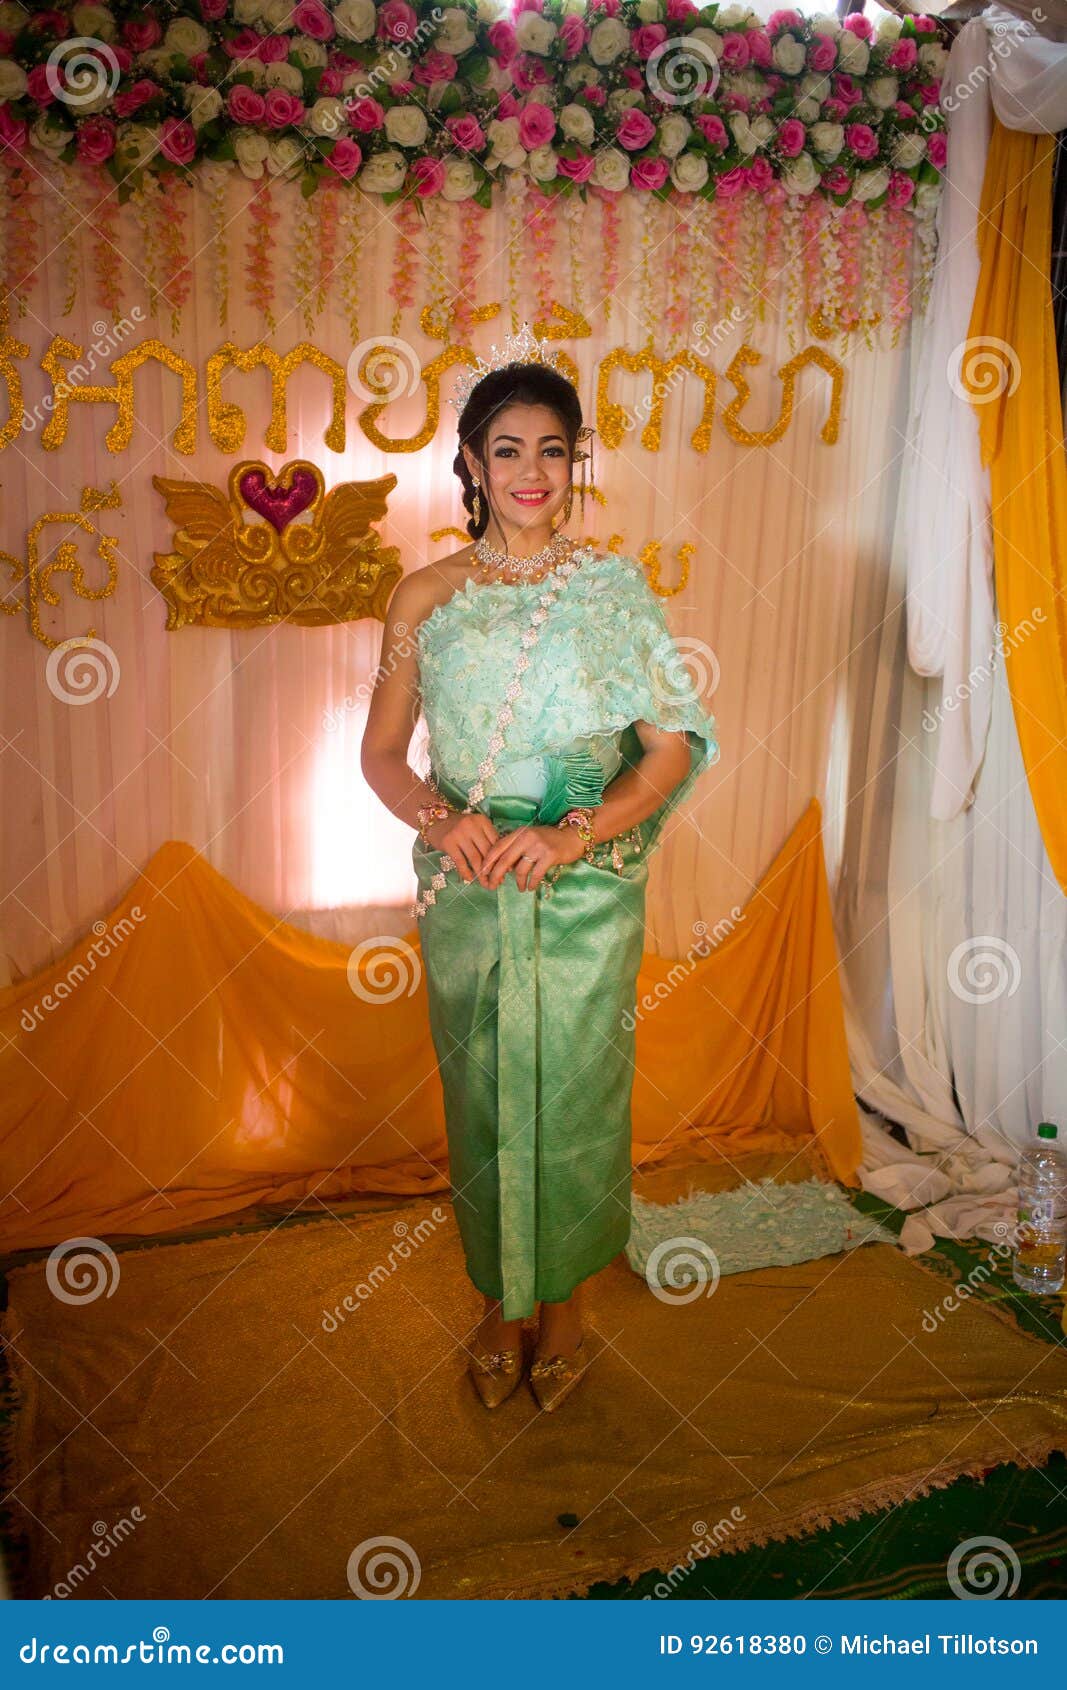 Indian Wedding Bridal Dress Lengha - Asian Bridal Dress | eBay